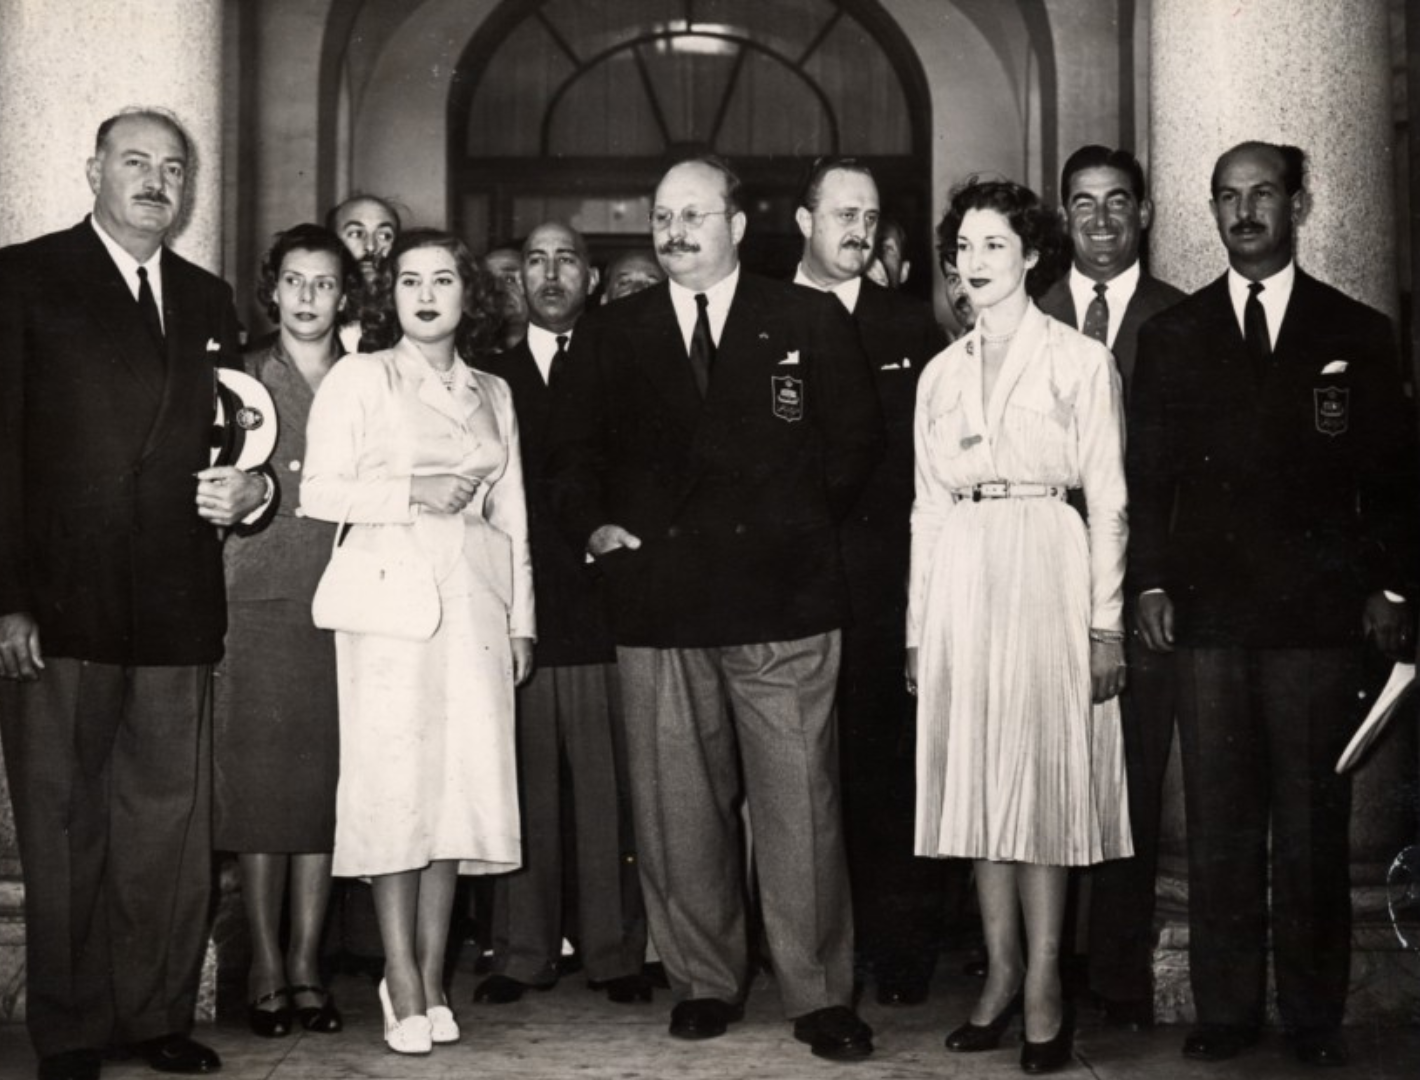 King Farouk, Queen Narriman, Princess Faiza and Ali Rauf at The Carlton Hotel Cannes